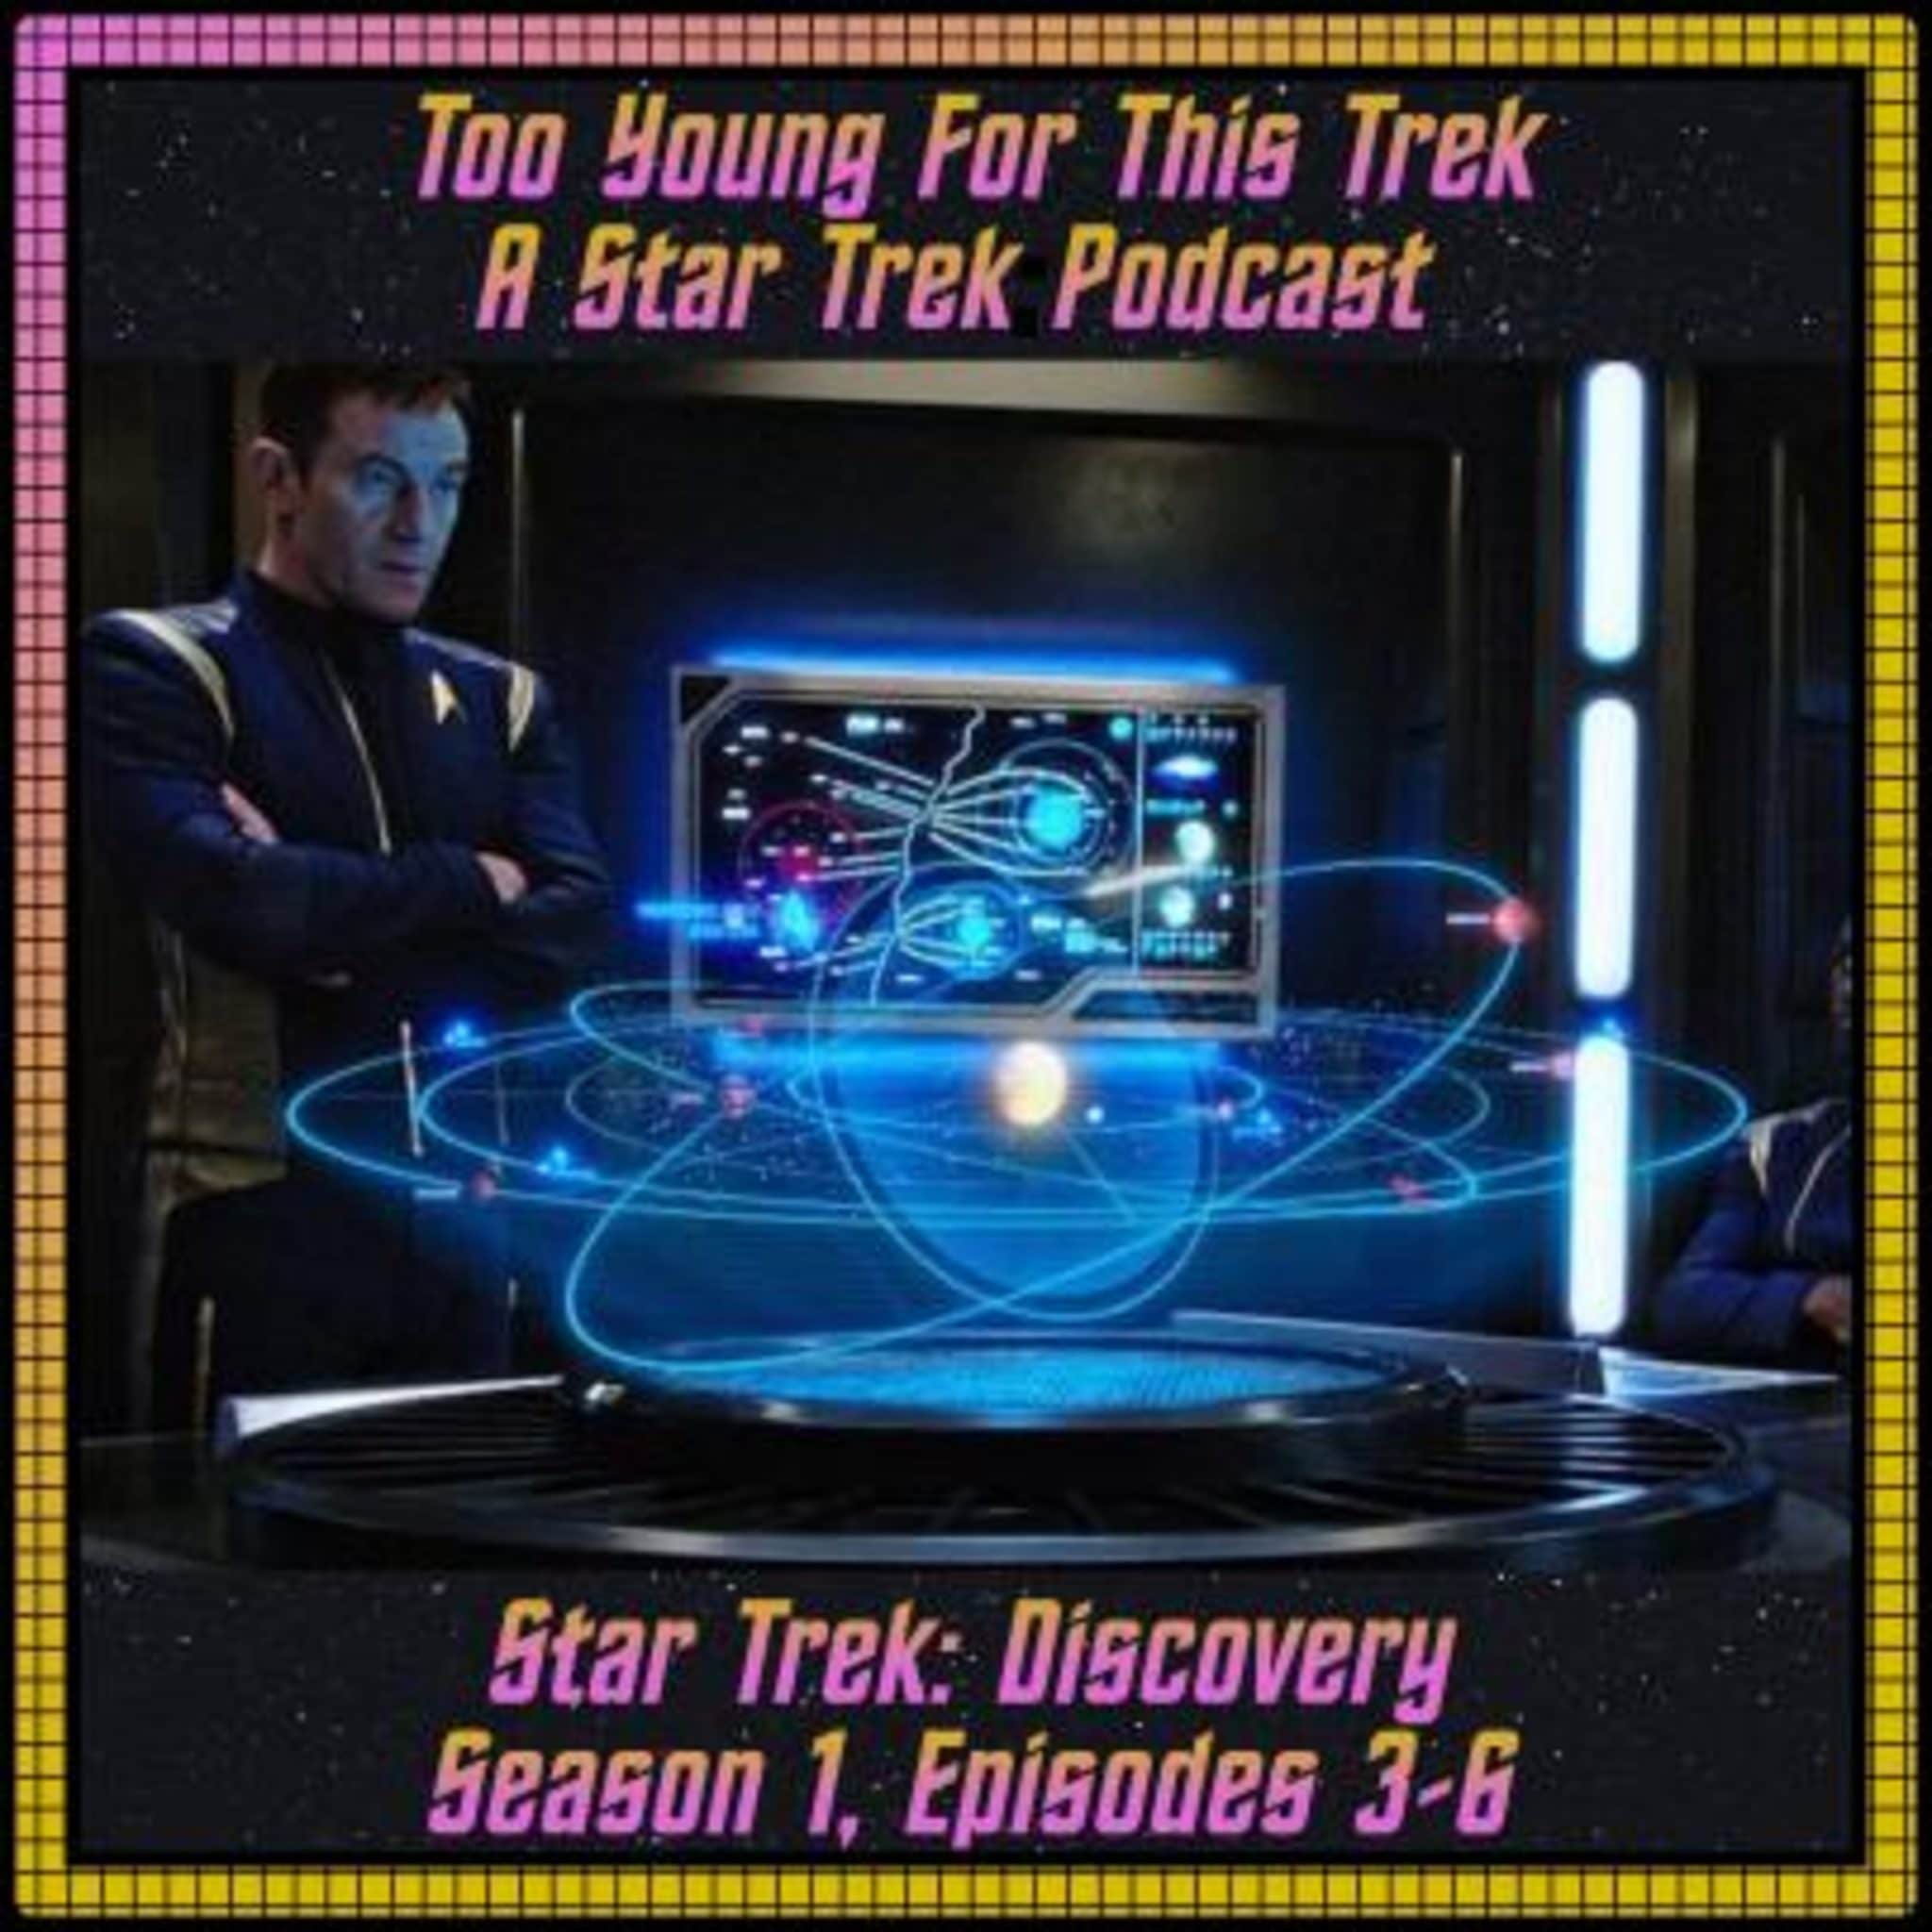 Star Trek: Discovery S1 E3-6